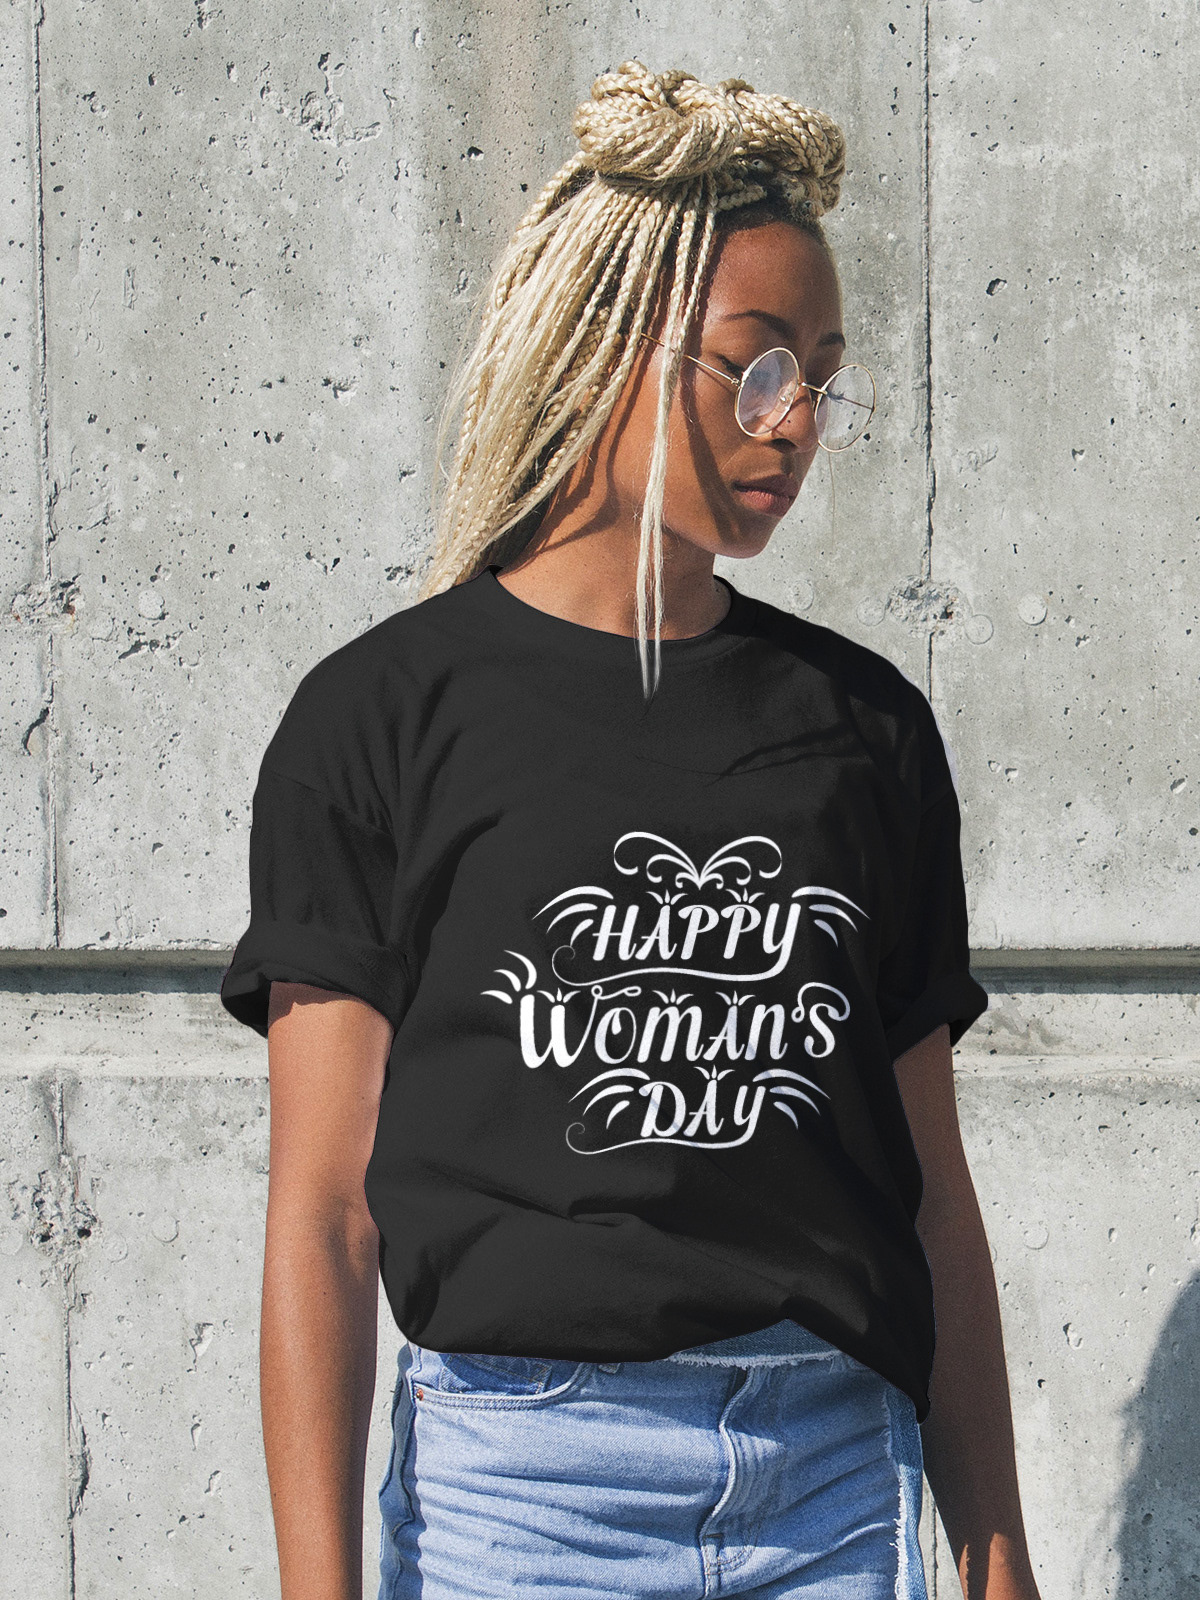 Happy Woman's Day T-shirt Design